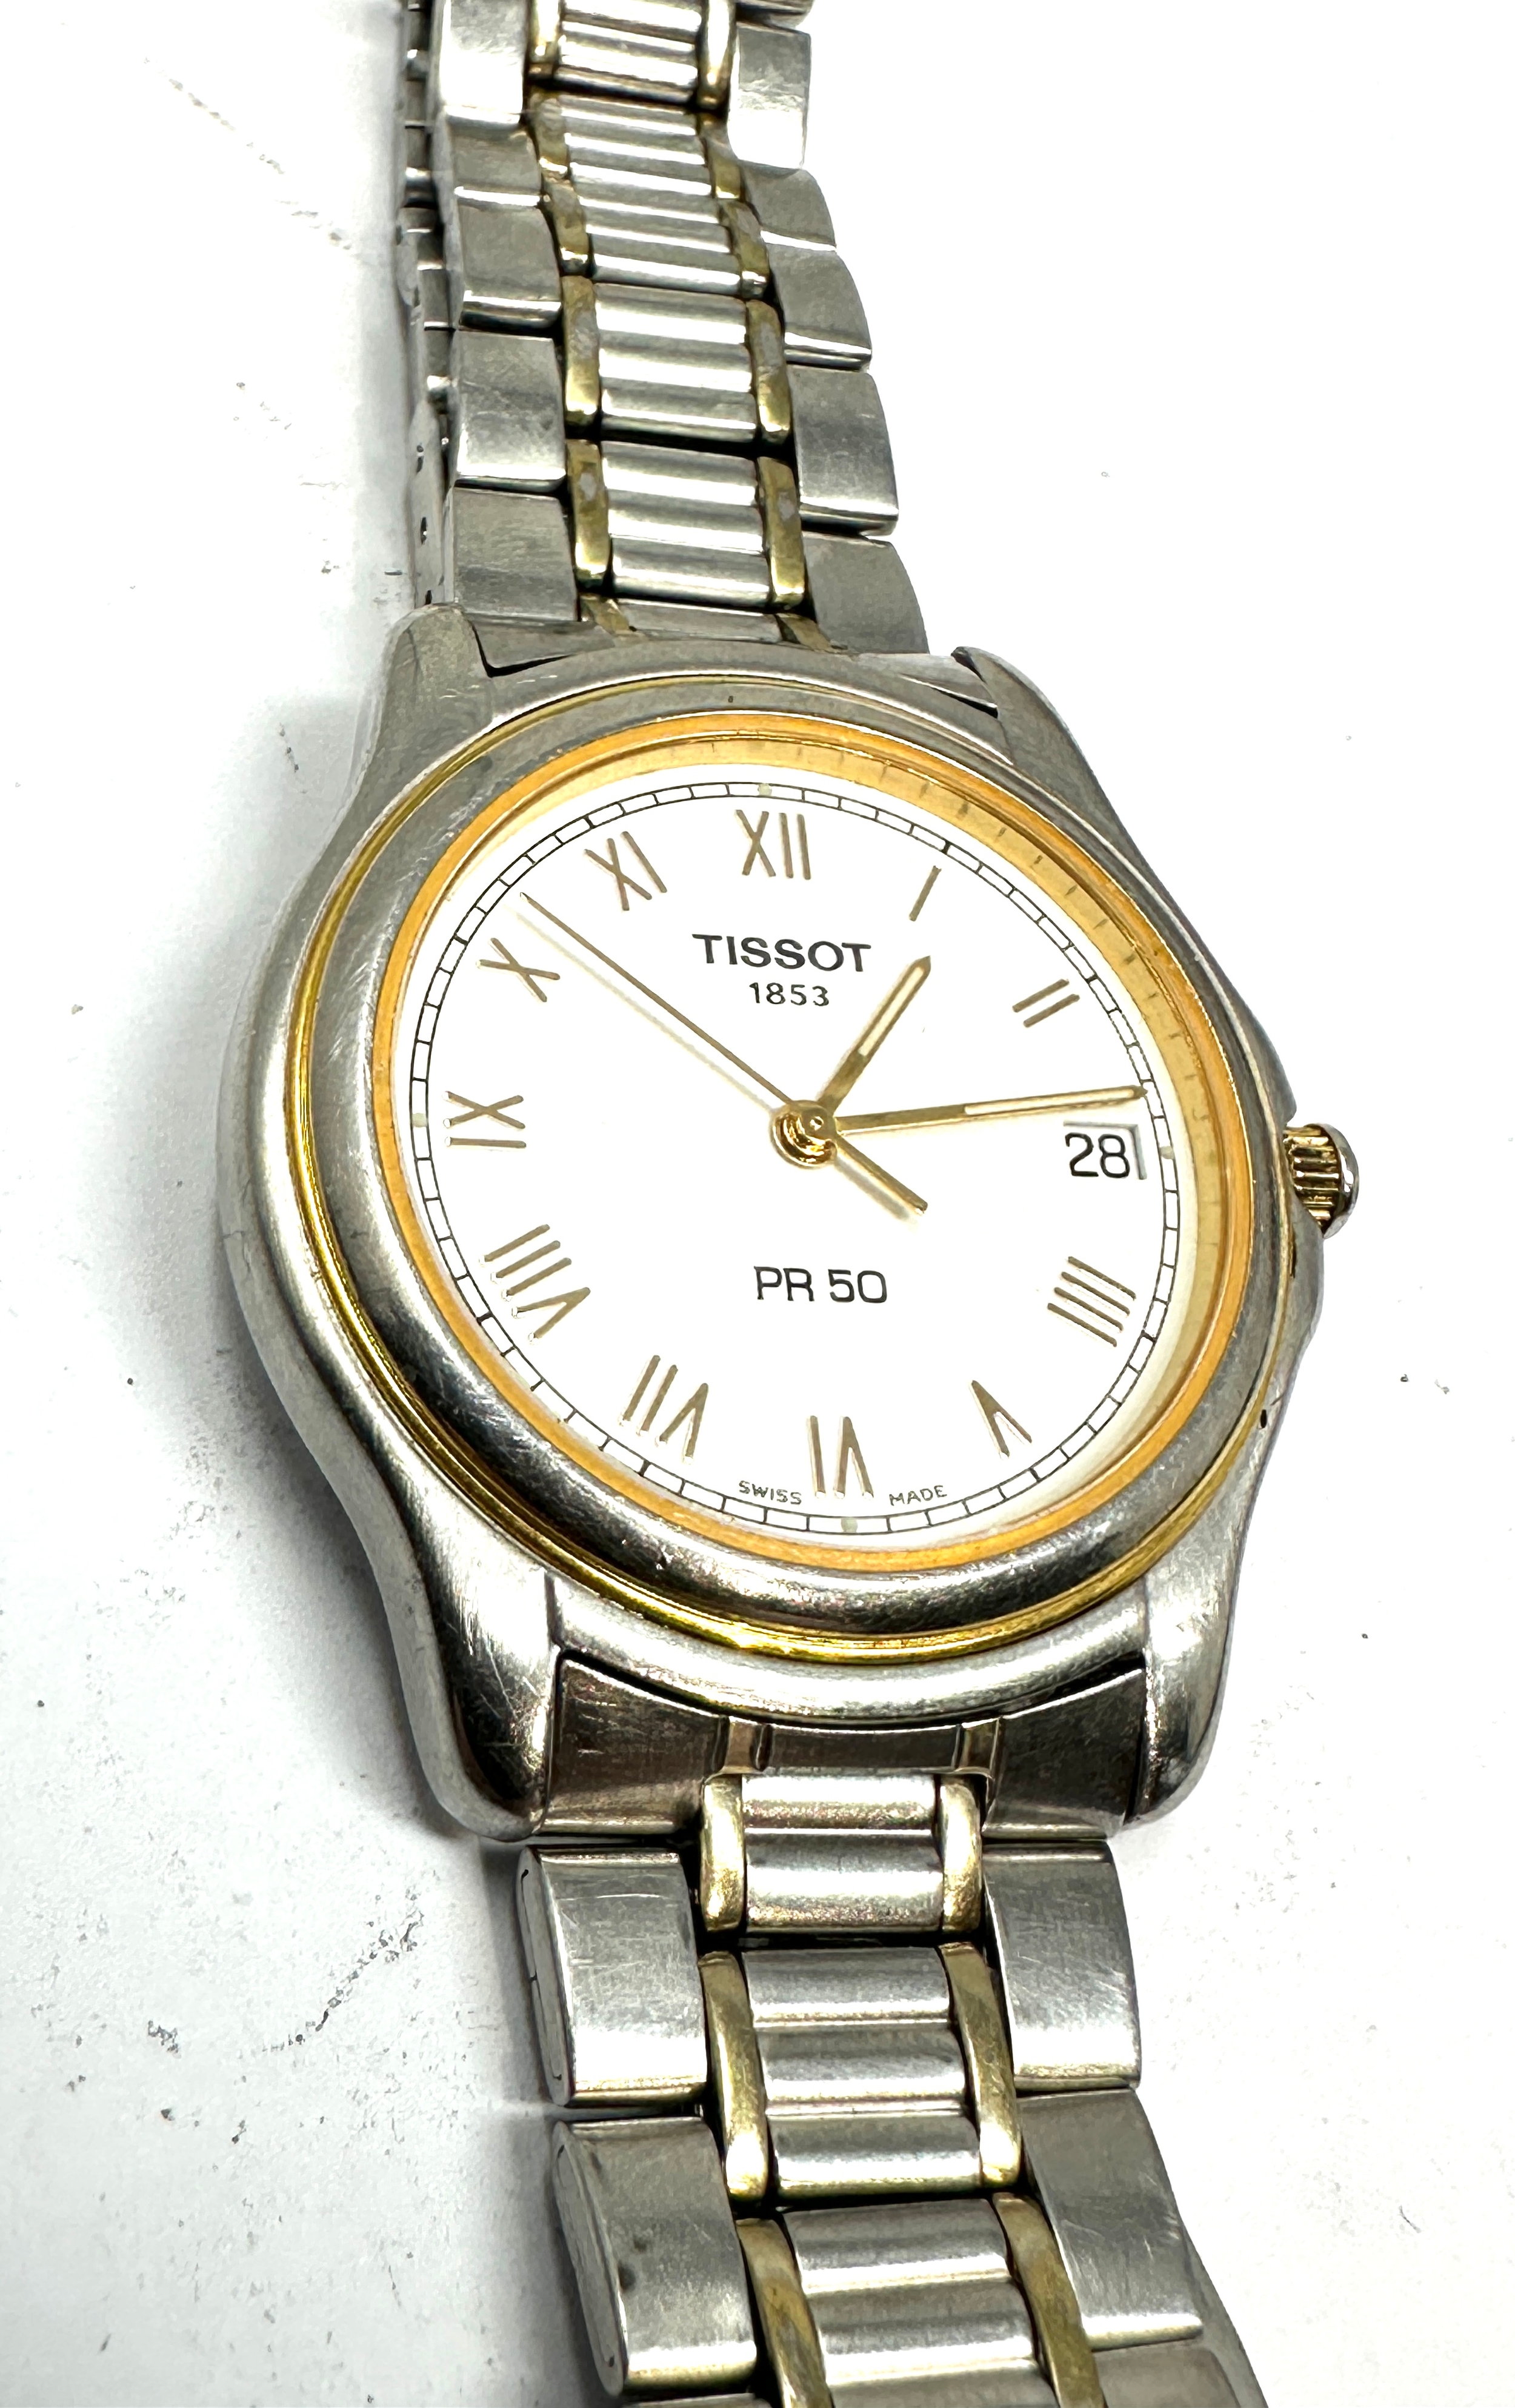 Gents Tissot 1853 pr50 date quartz wristwatch the watch is ticking - Image 2 of 5